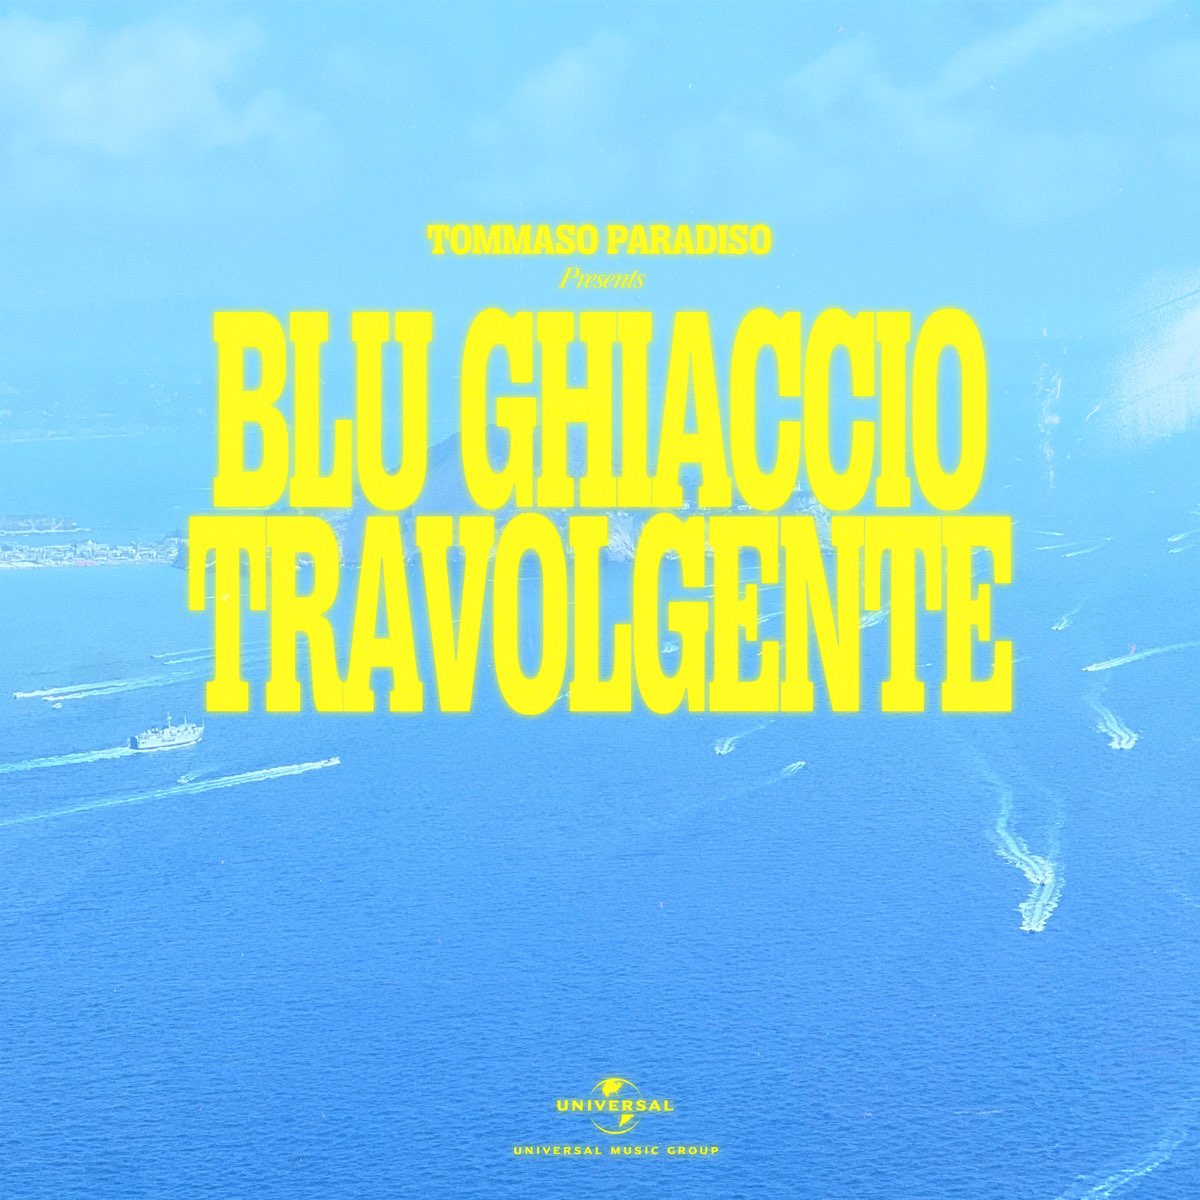 Blu Ghiaccio Travolgente - Single - Album by Tommaso Paradiso